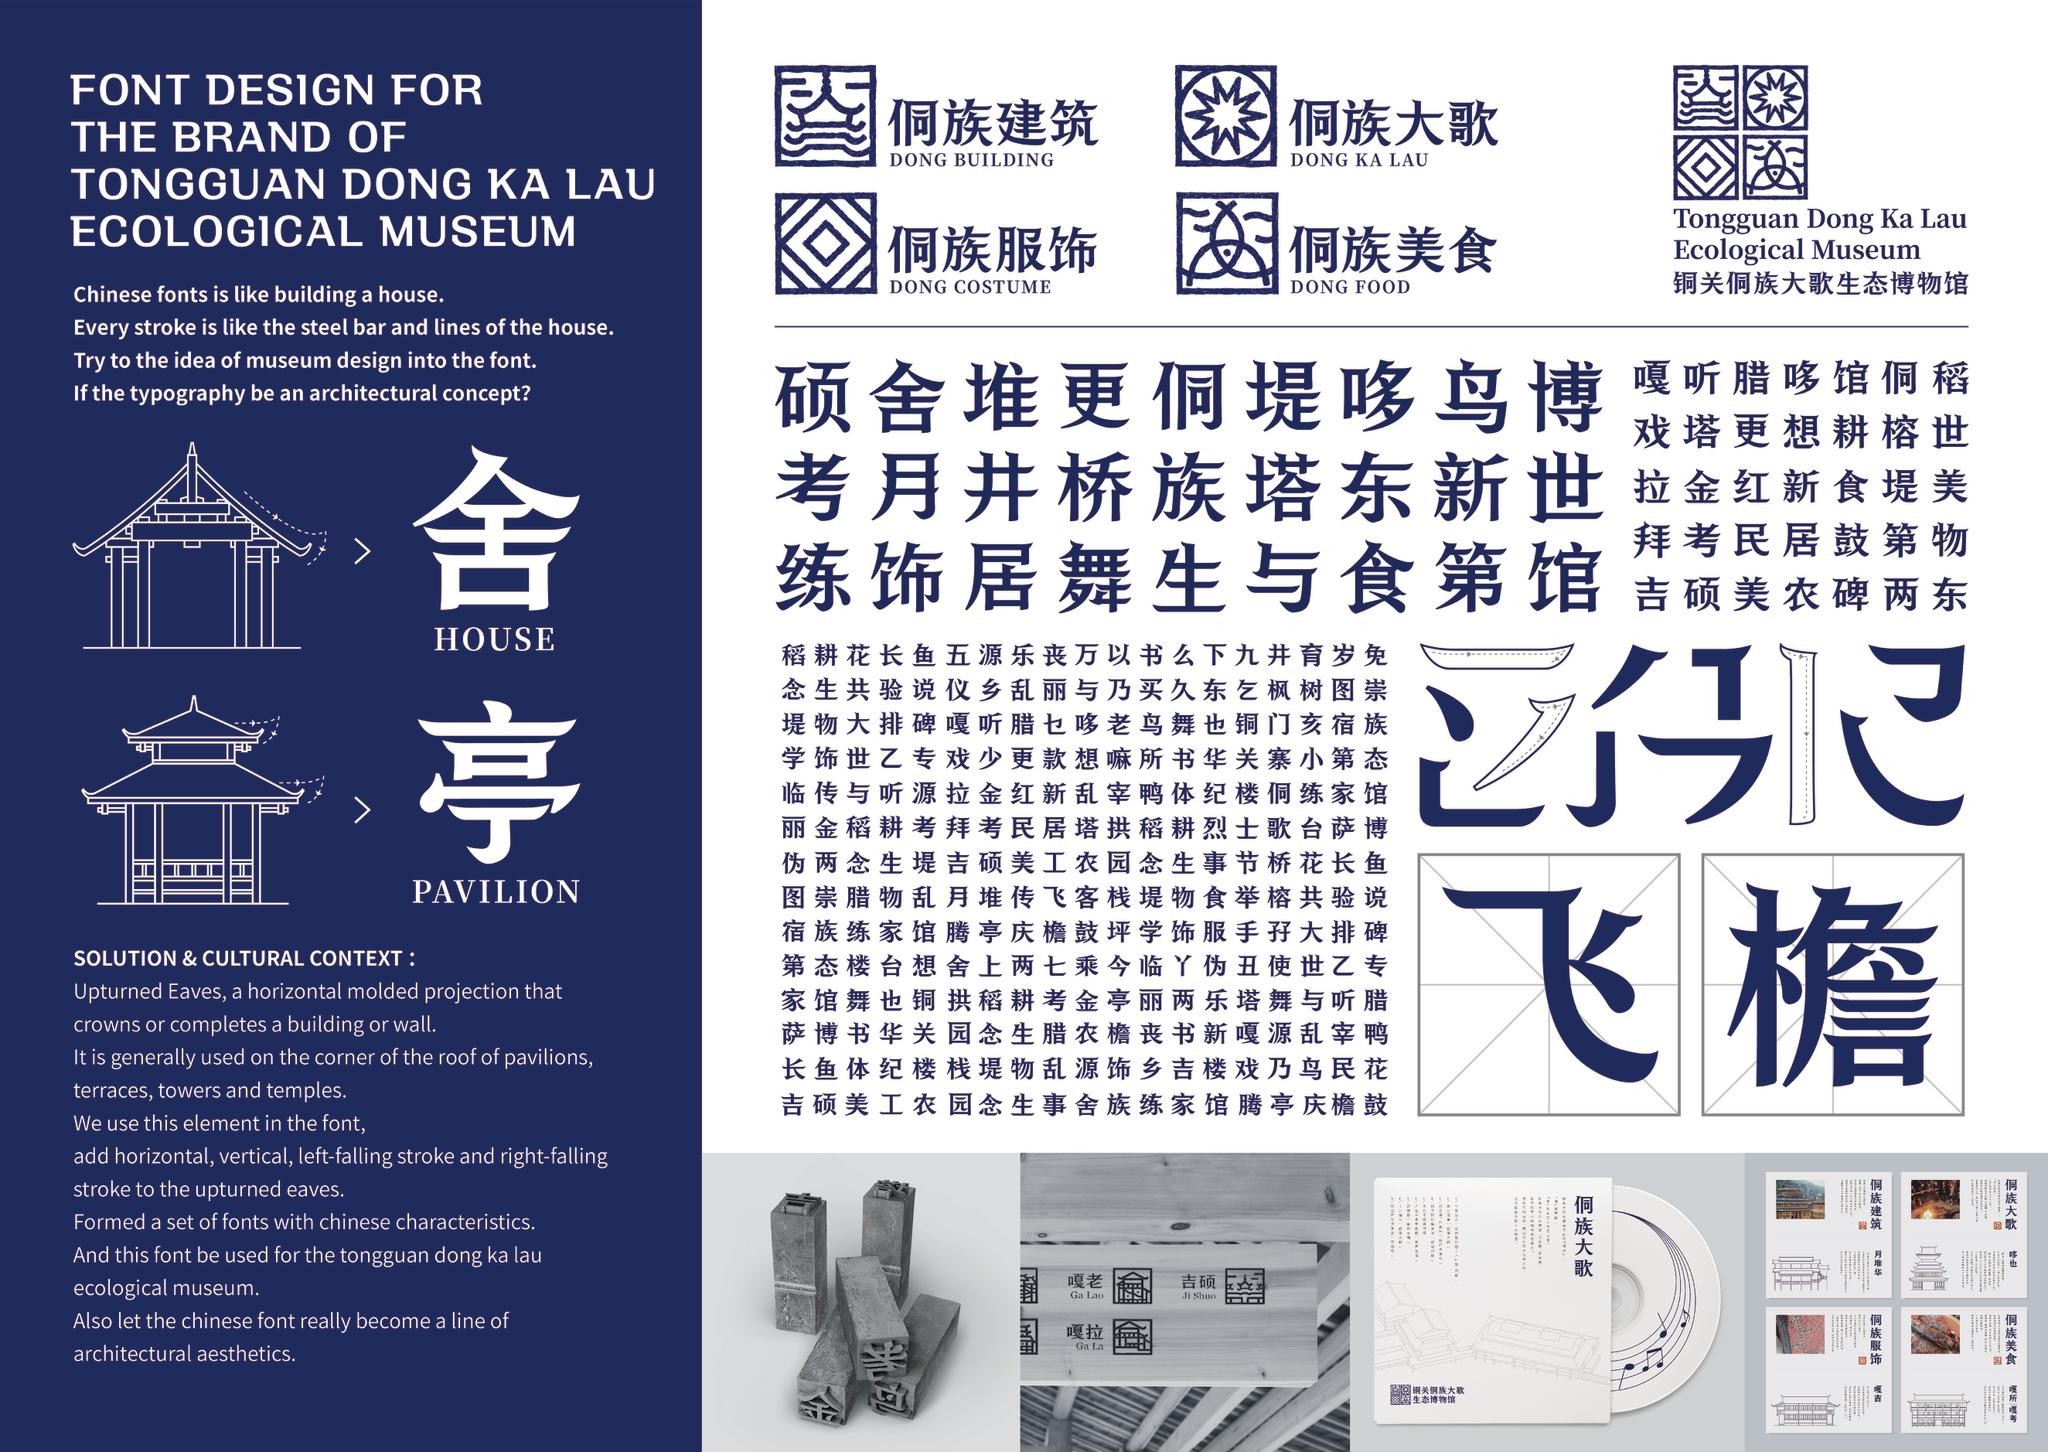 Font Design for the Brand of Tongguan Dong Ka Lau Ecological Museum